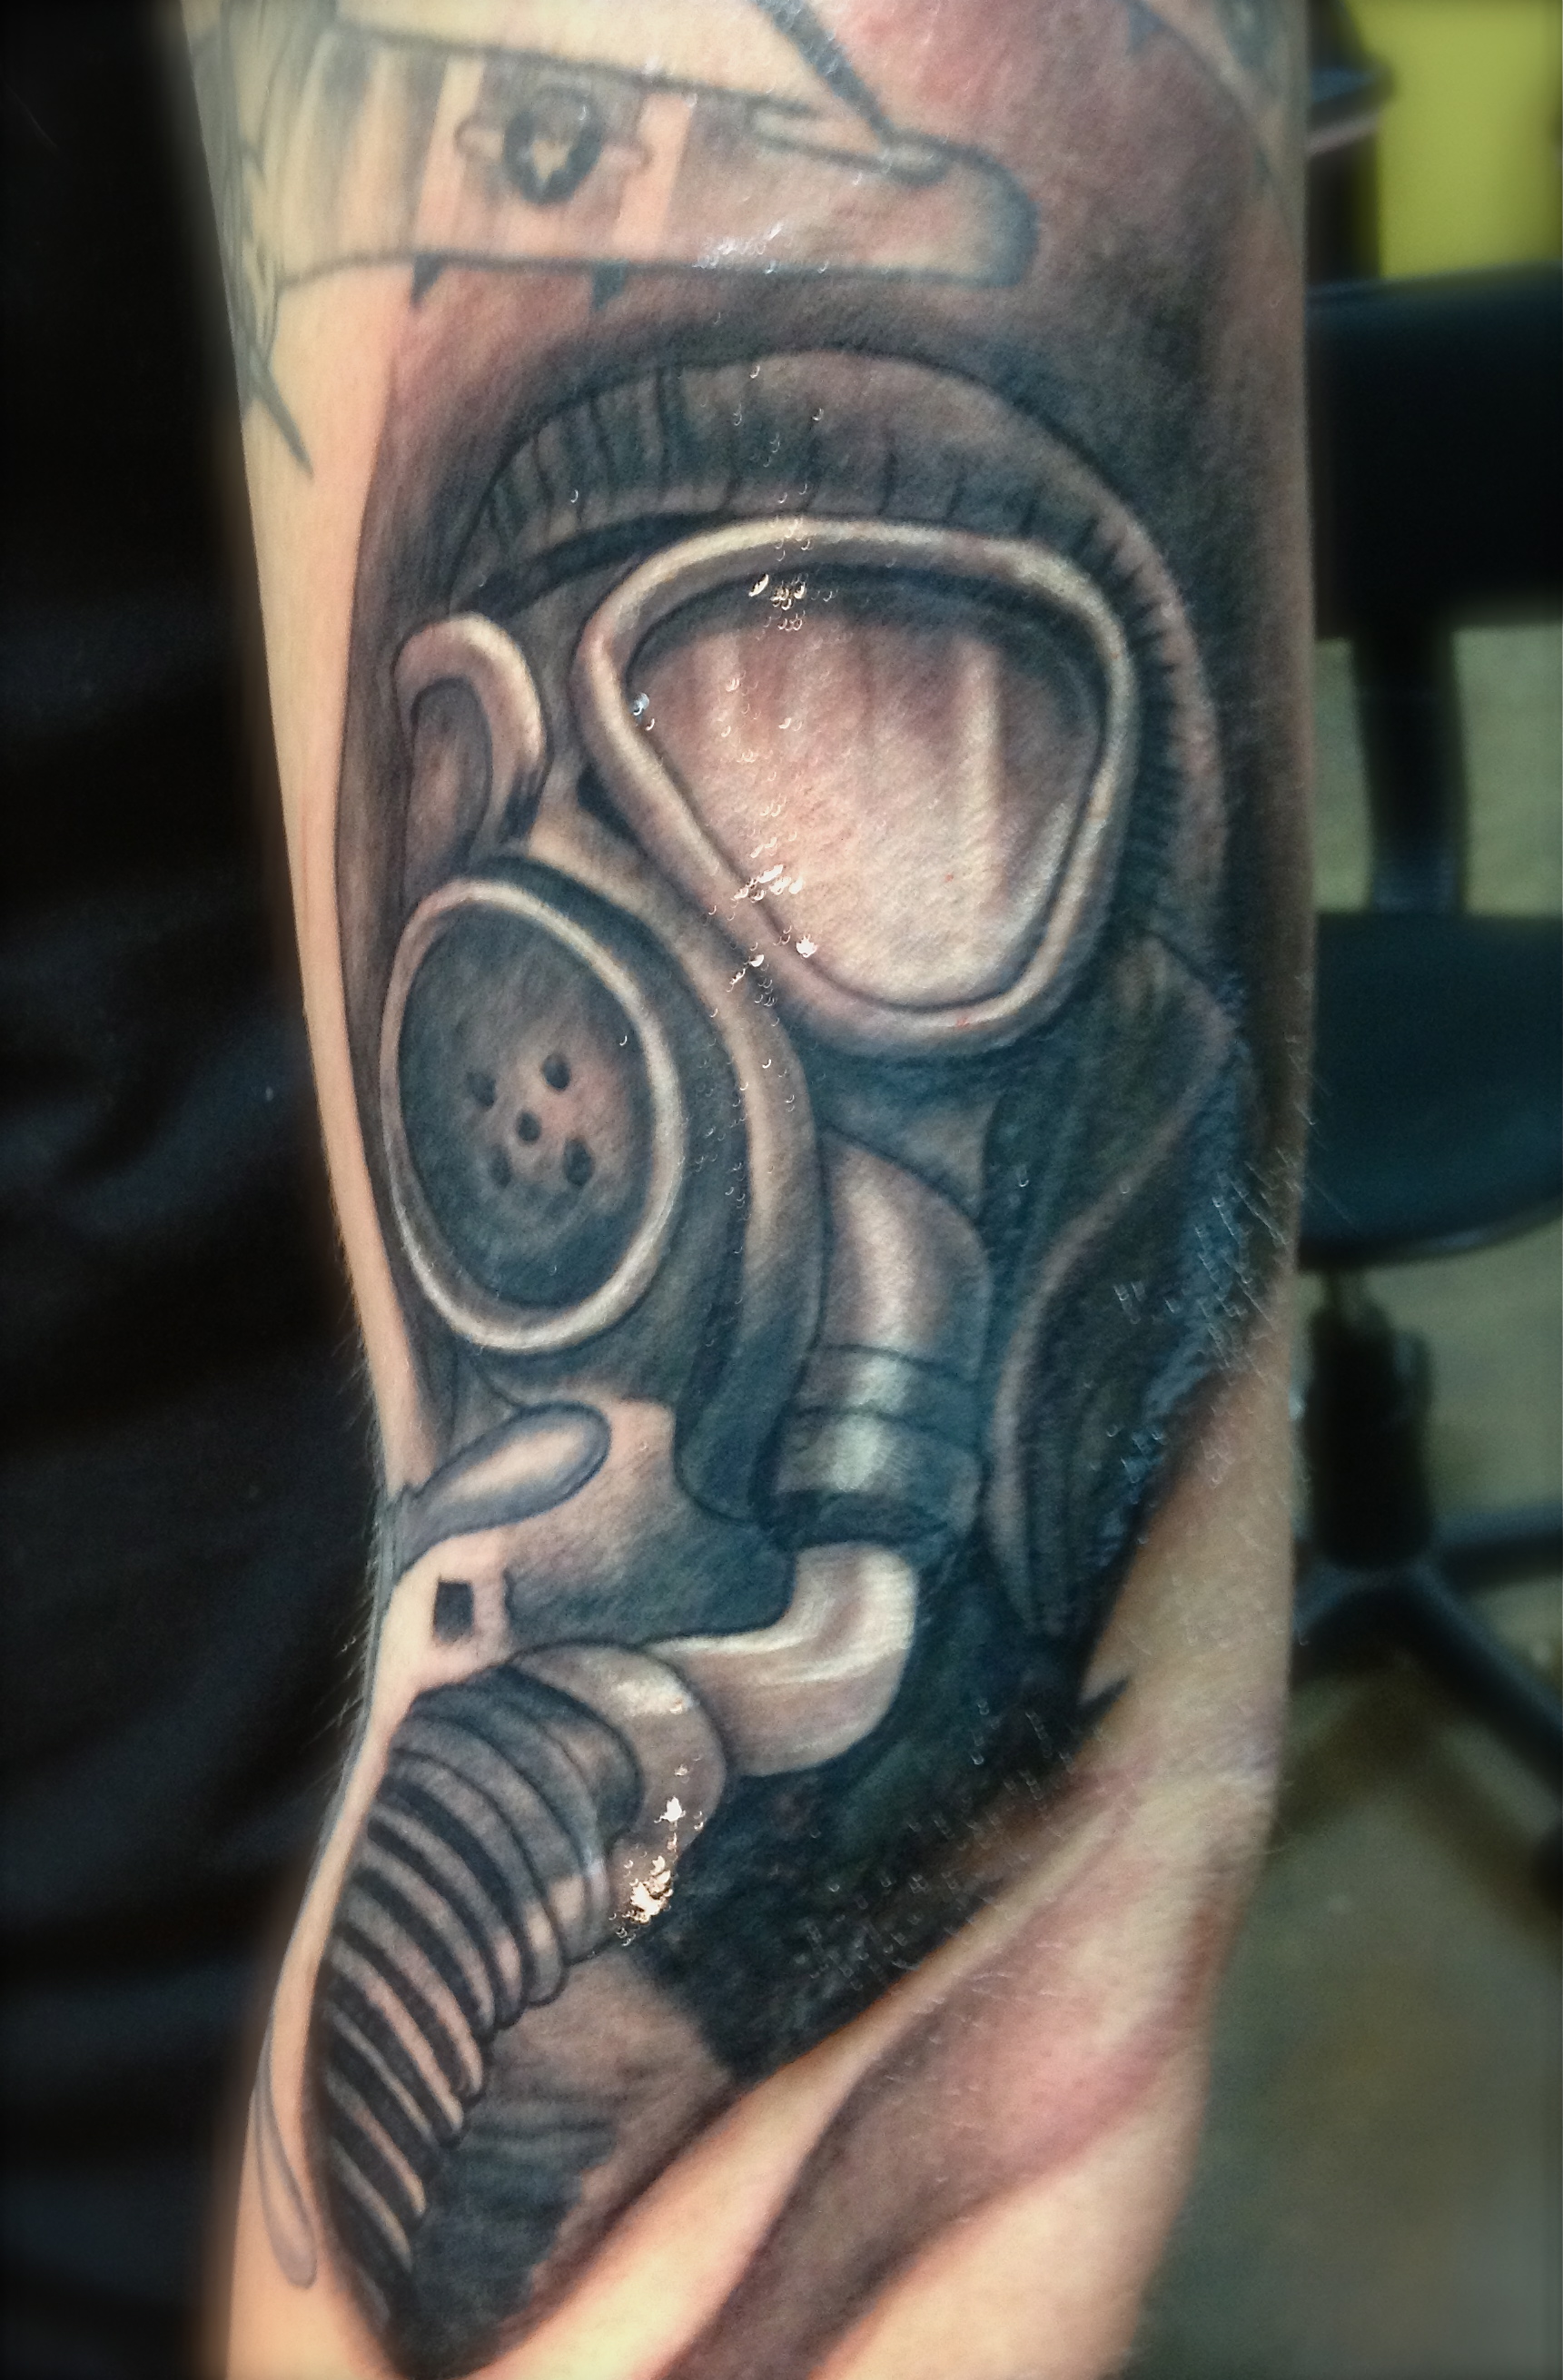 gas mask tattoo sketch